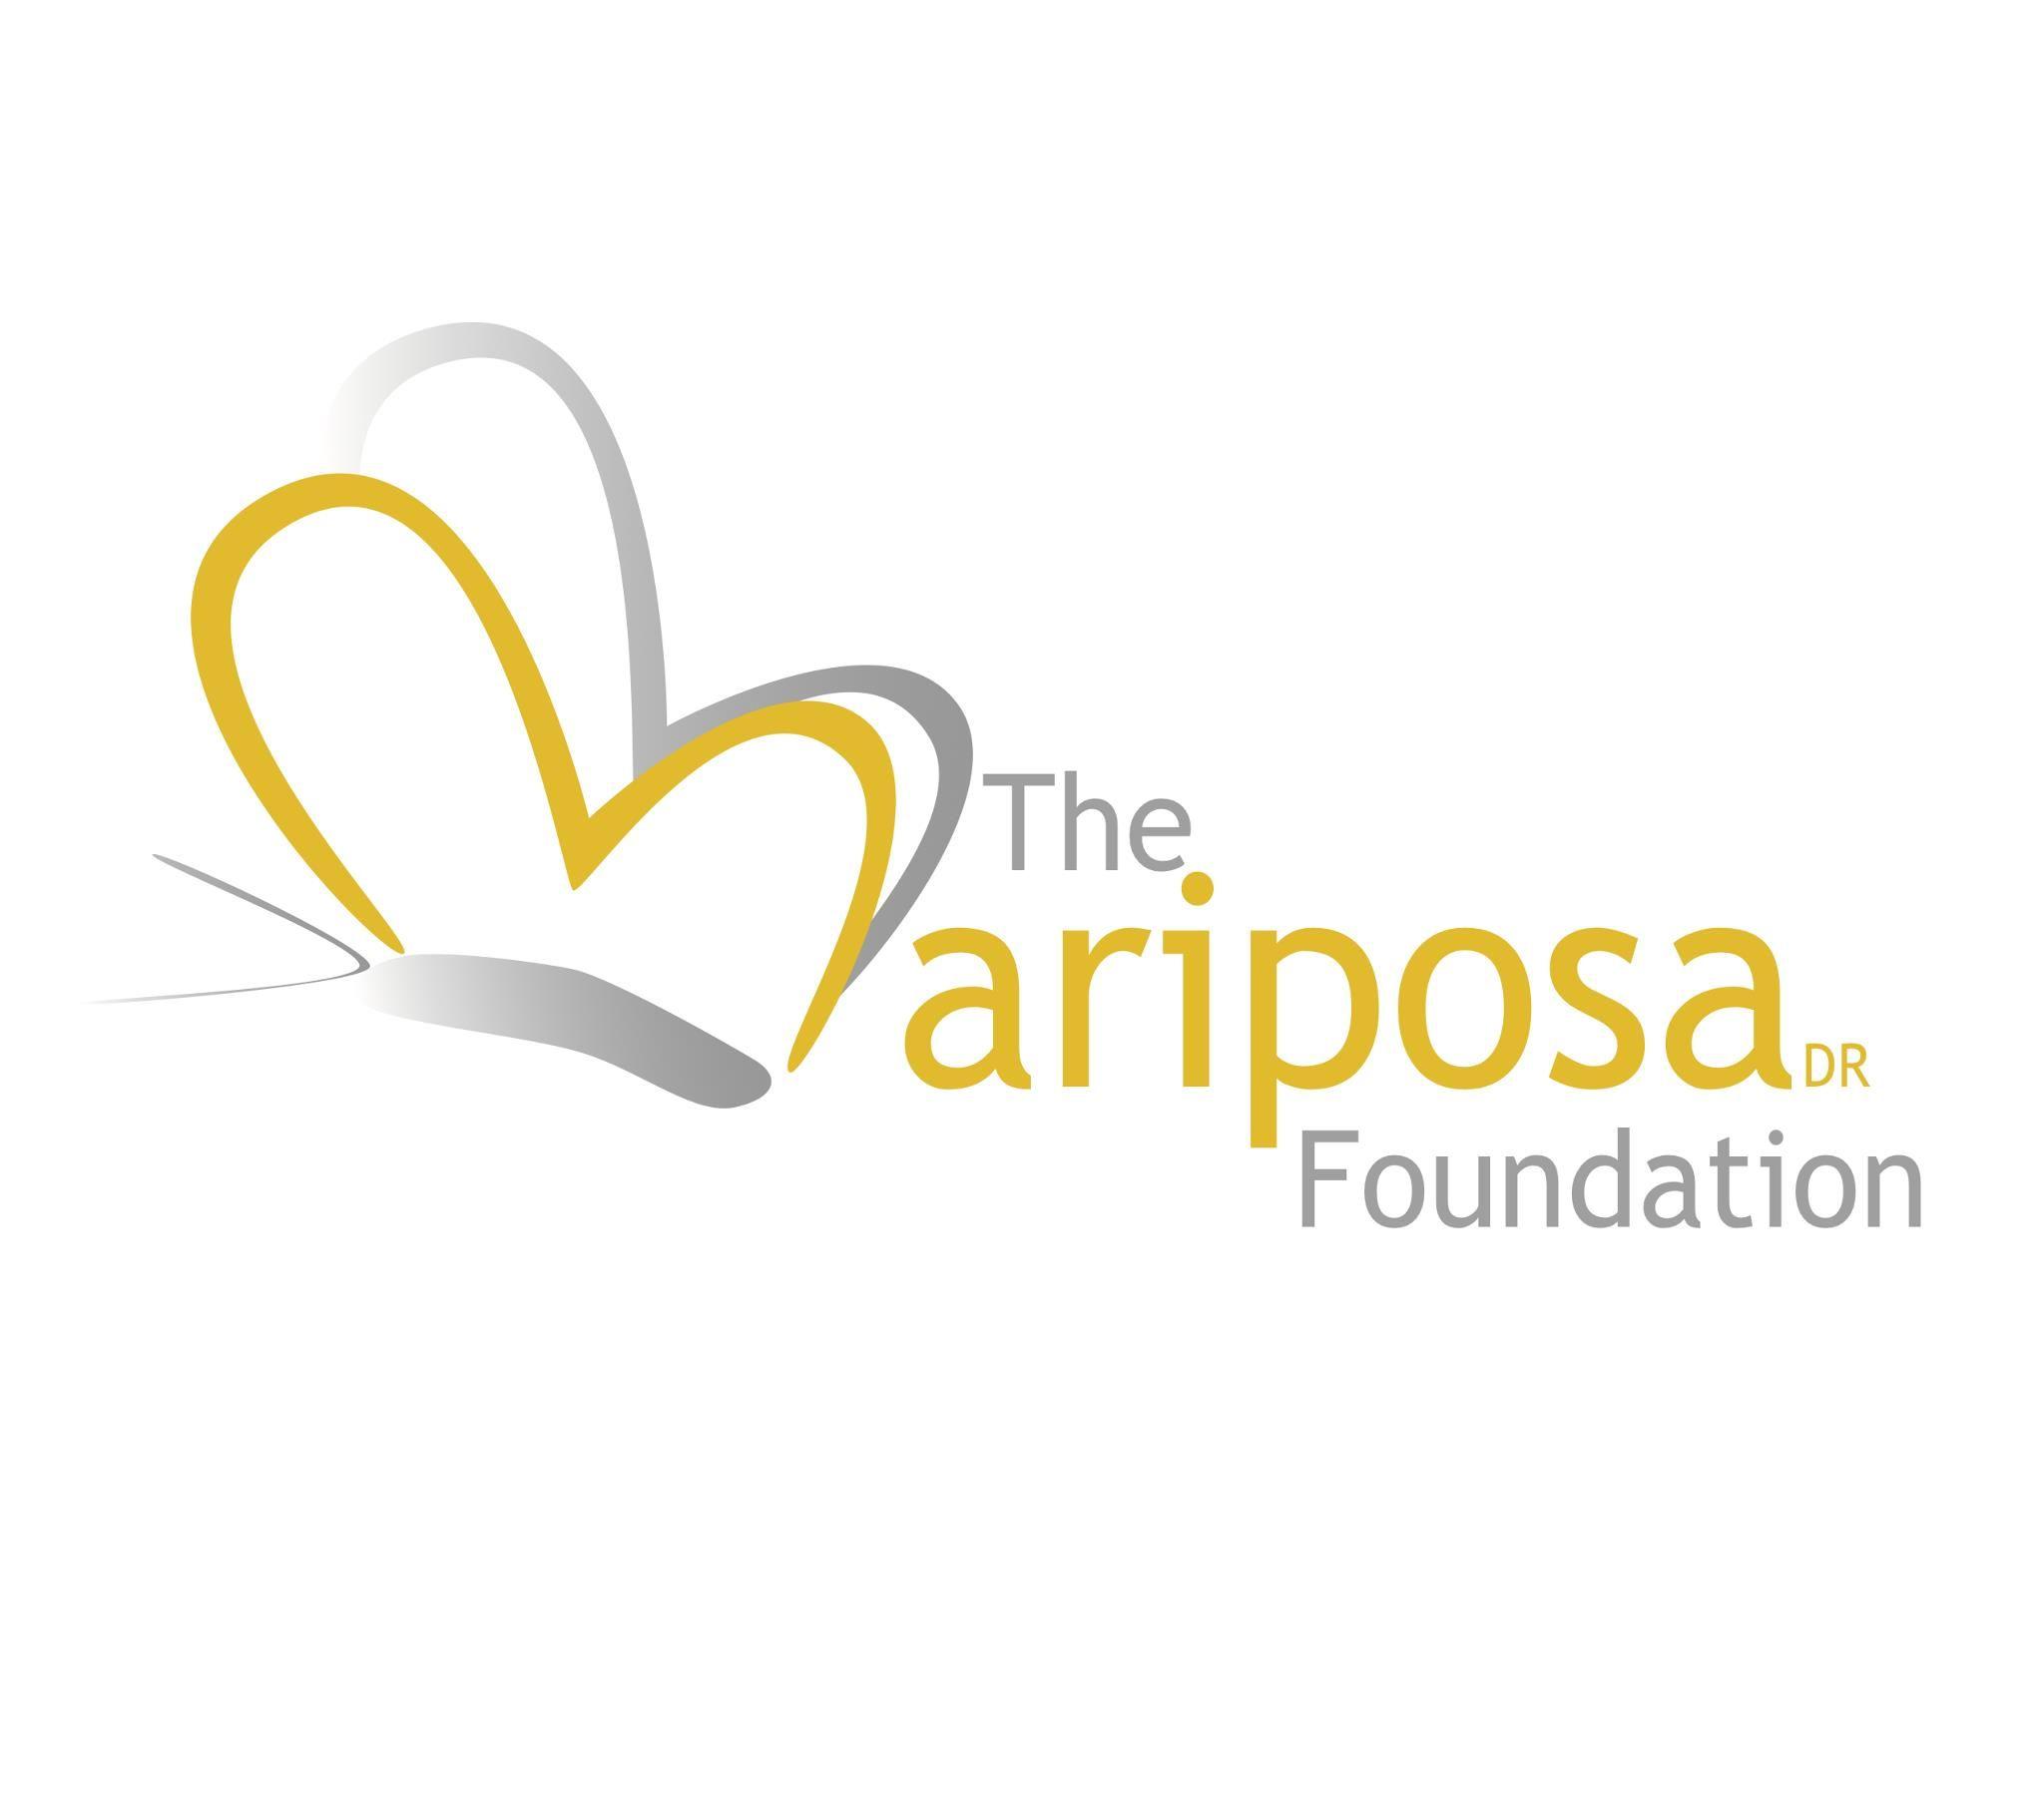 Mariposa Logo - Mariposa Foundation - logo - Girls Not Brides